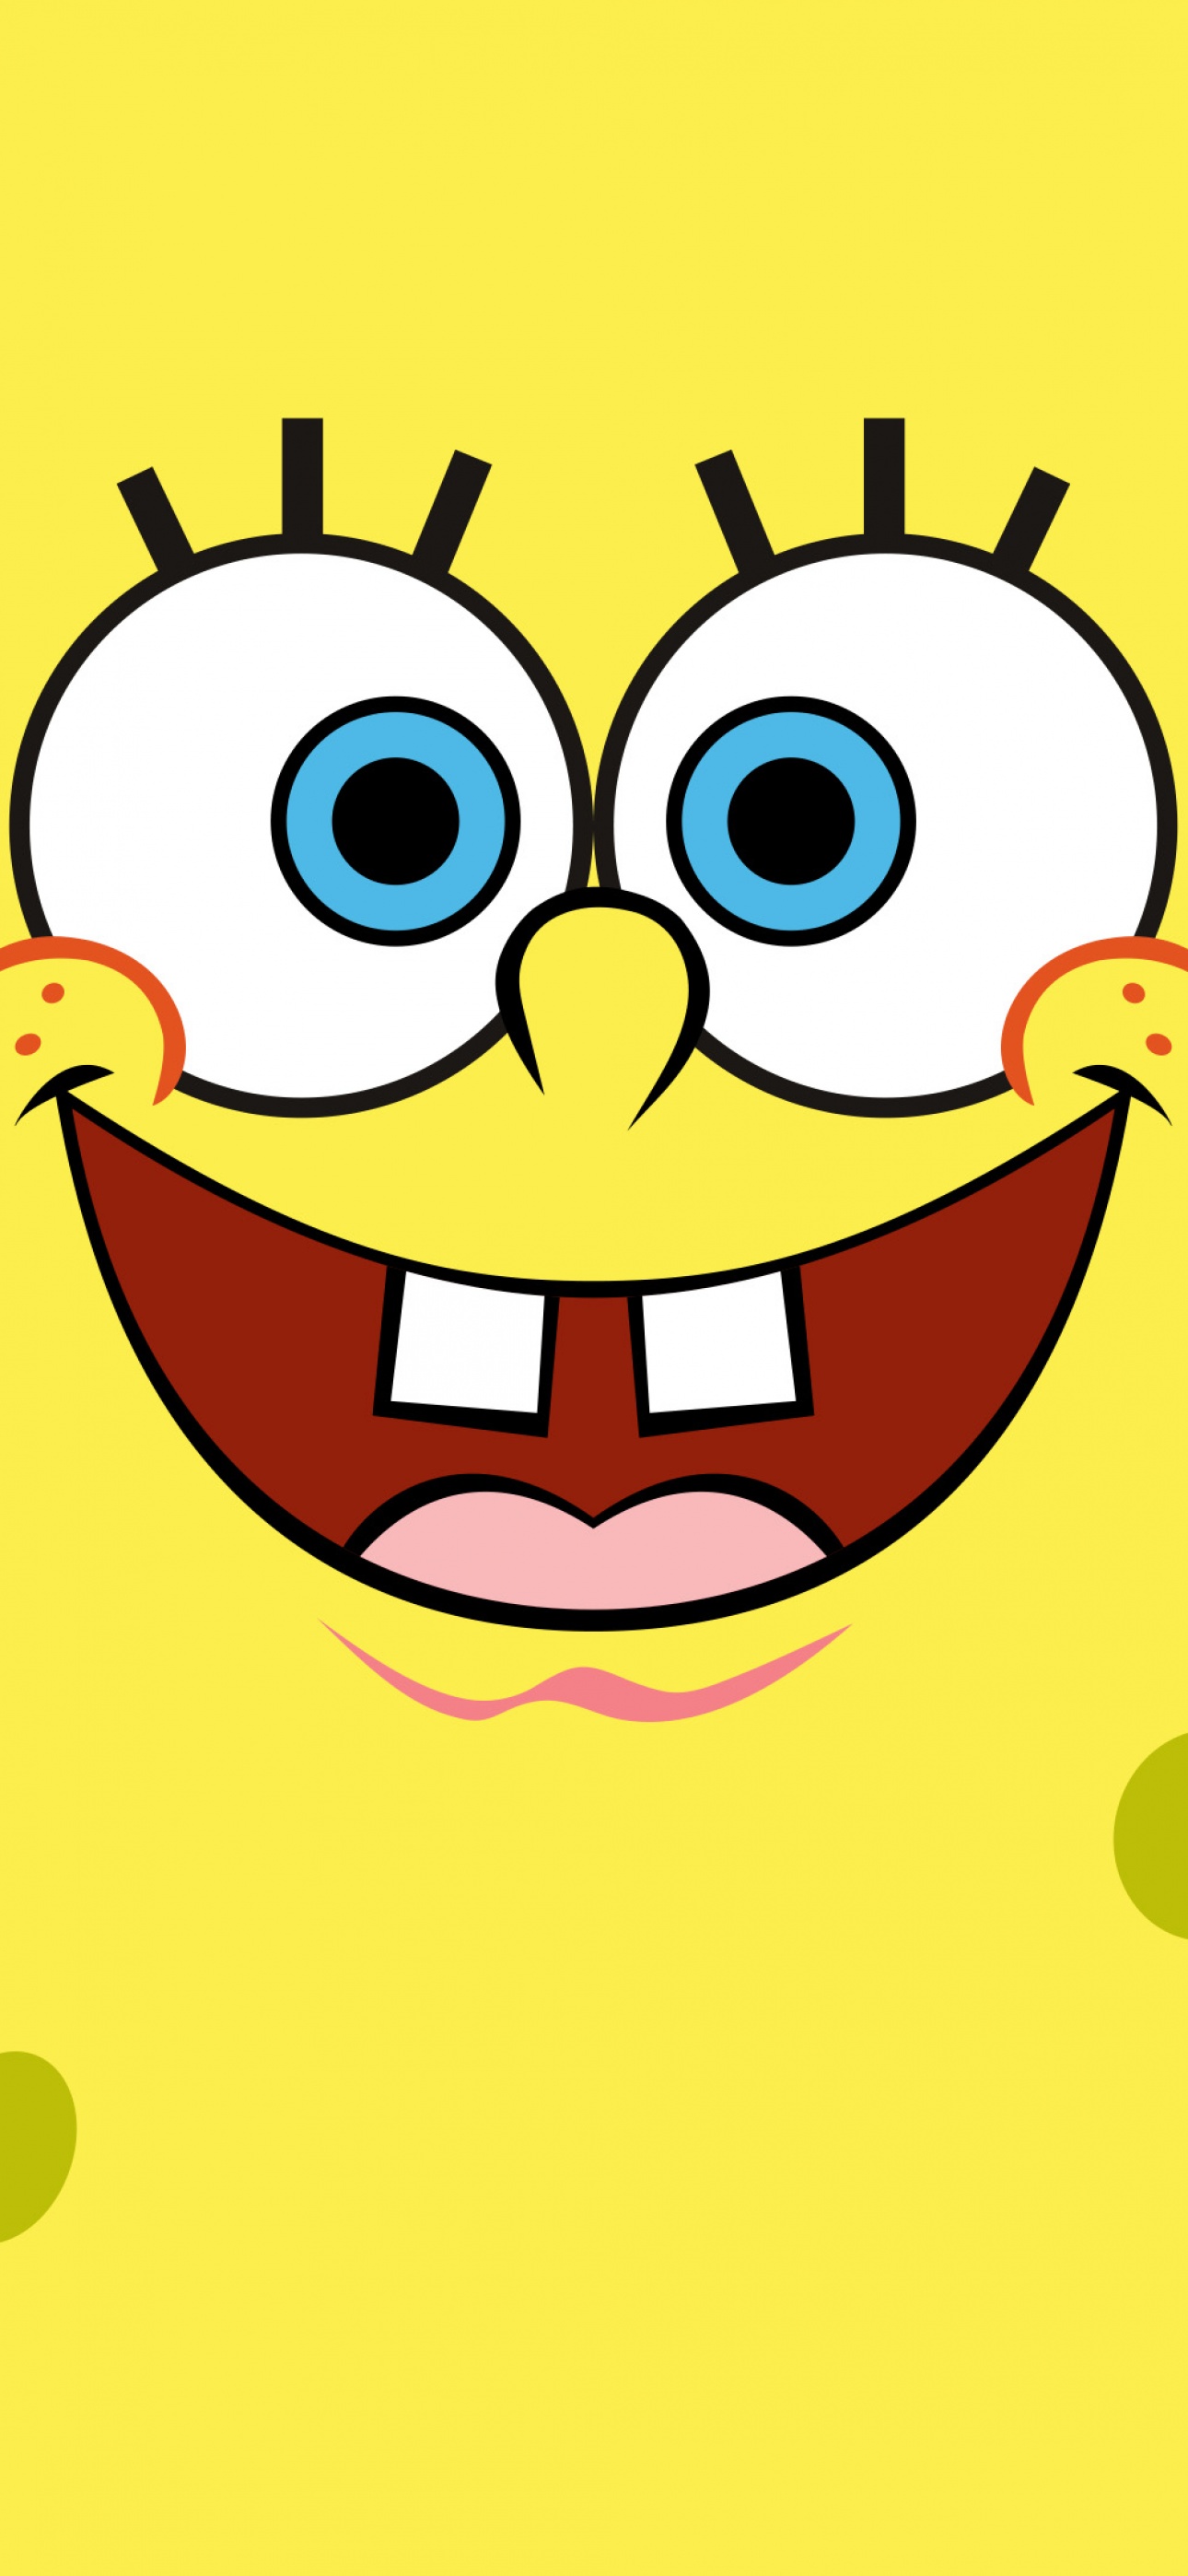 SpongeBob smiley face Wallpaper 4K, Yellow background, Minimal, #9386